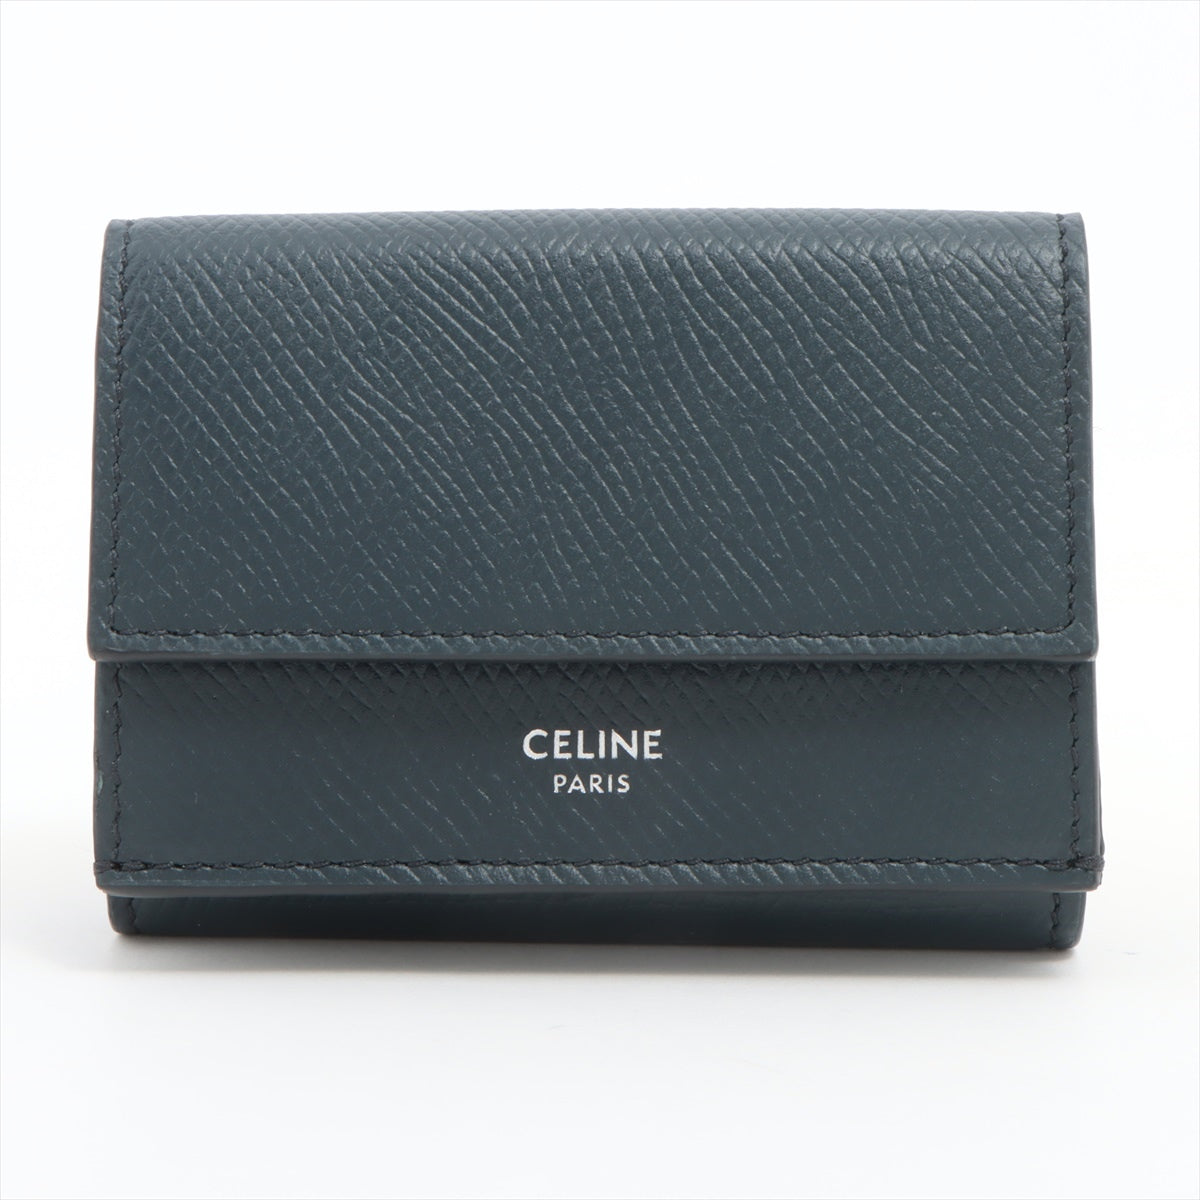 CELINE FOLDED Compact Wallet Leather Wallet Navy blue